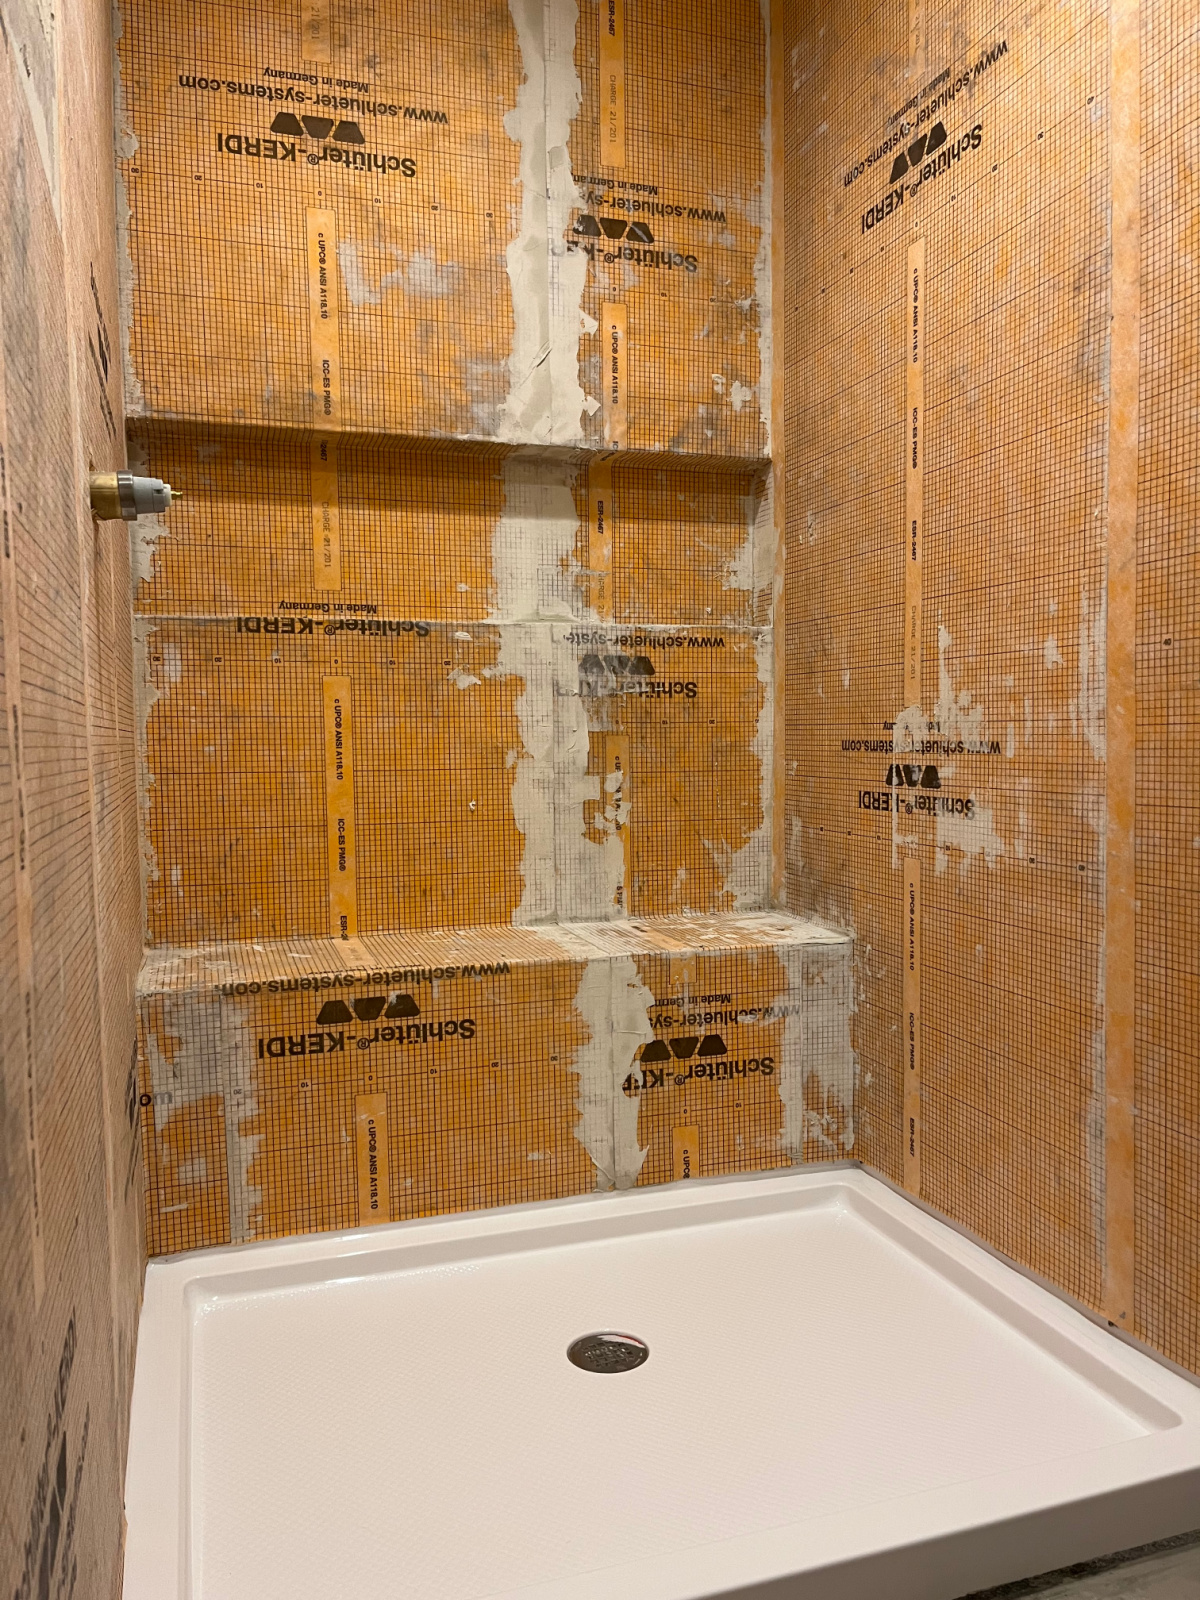 Bathroom Renovations Alpharetta